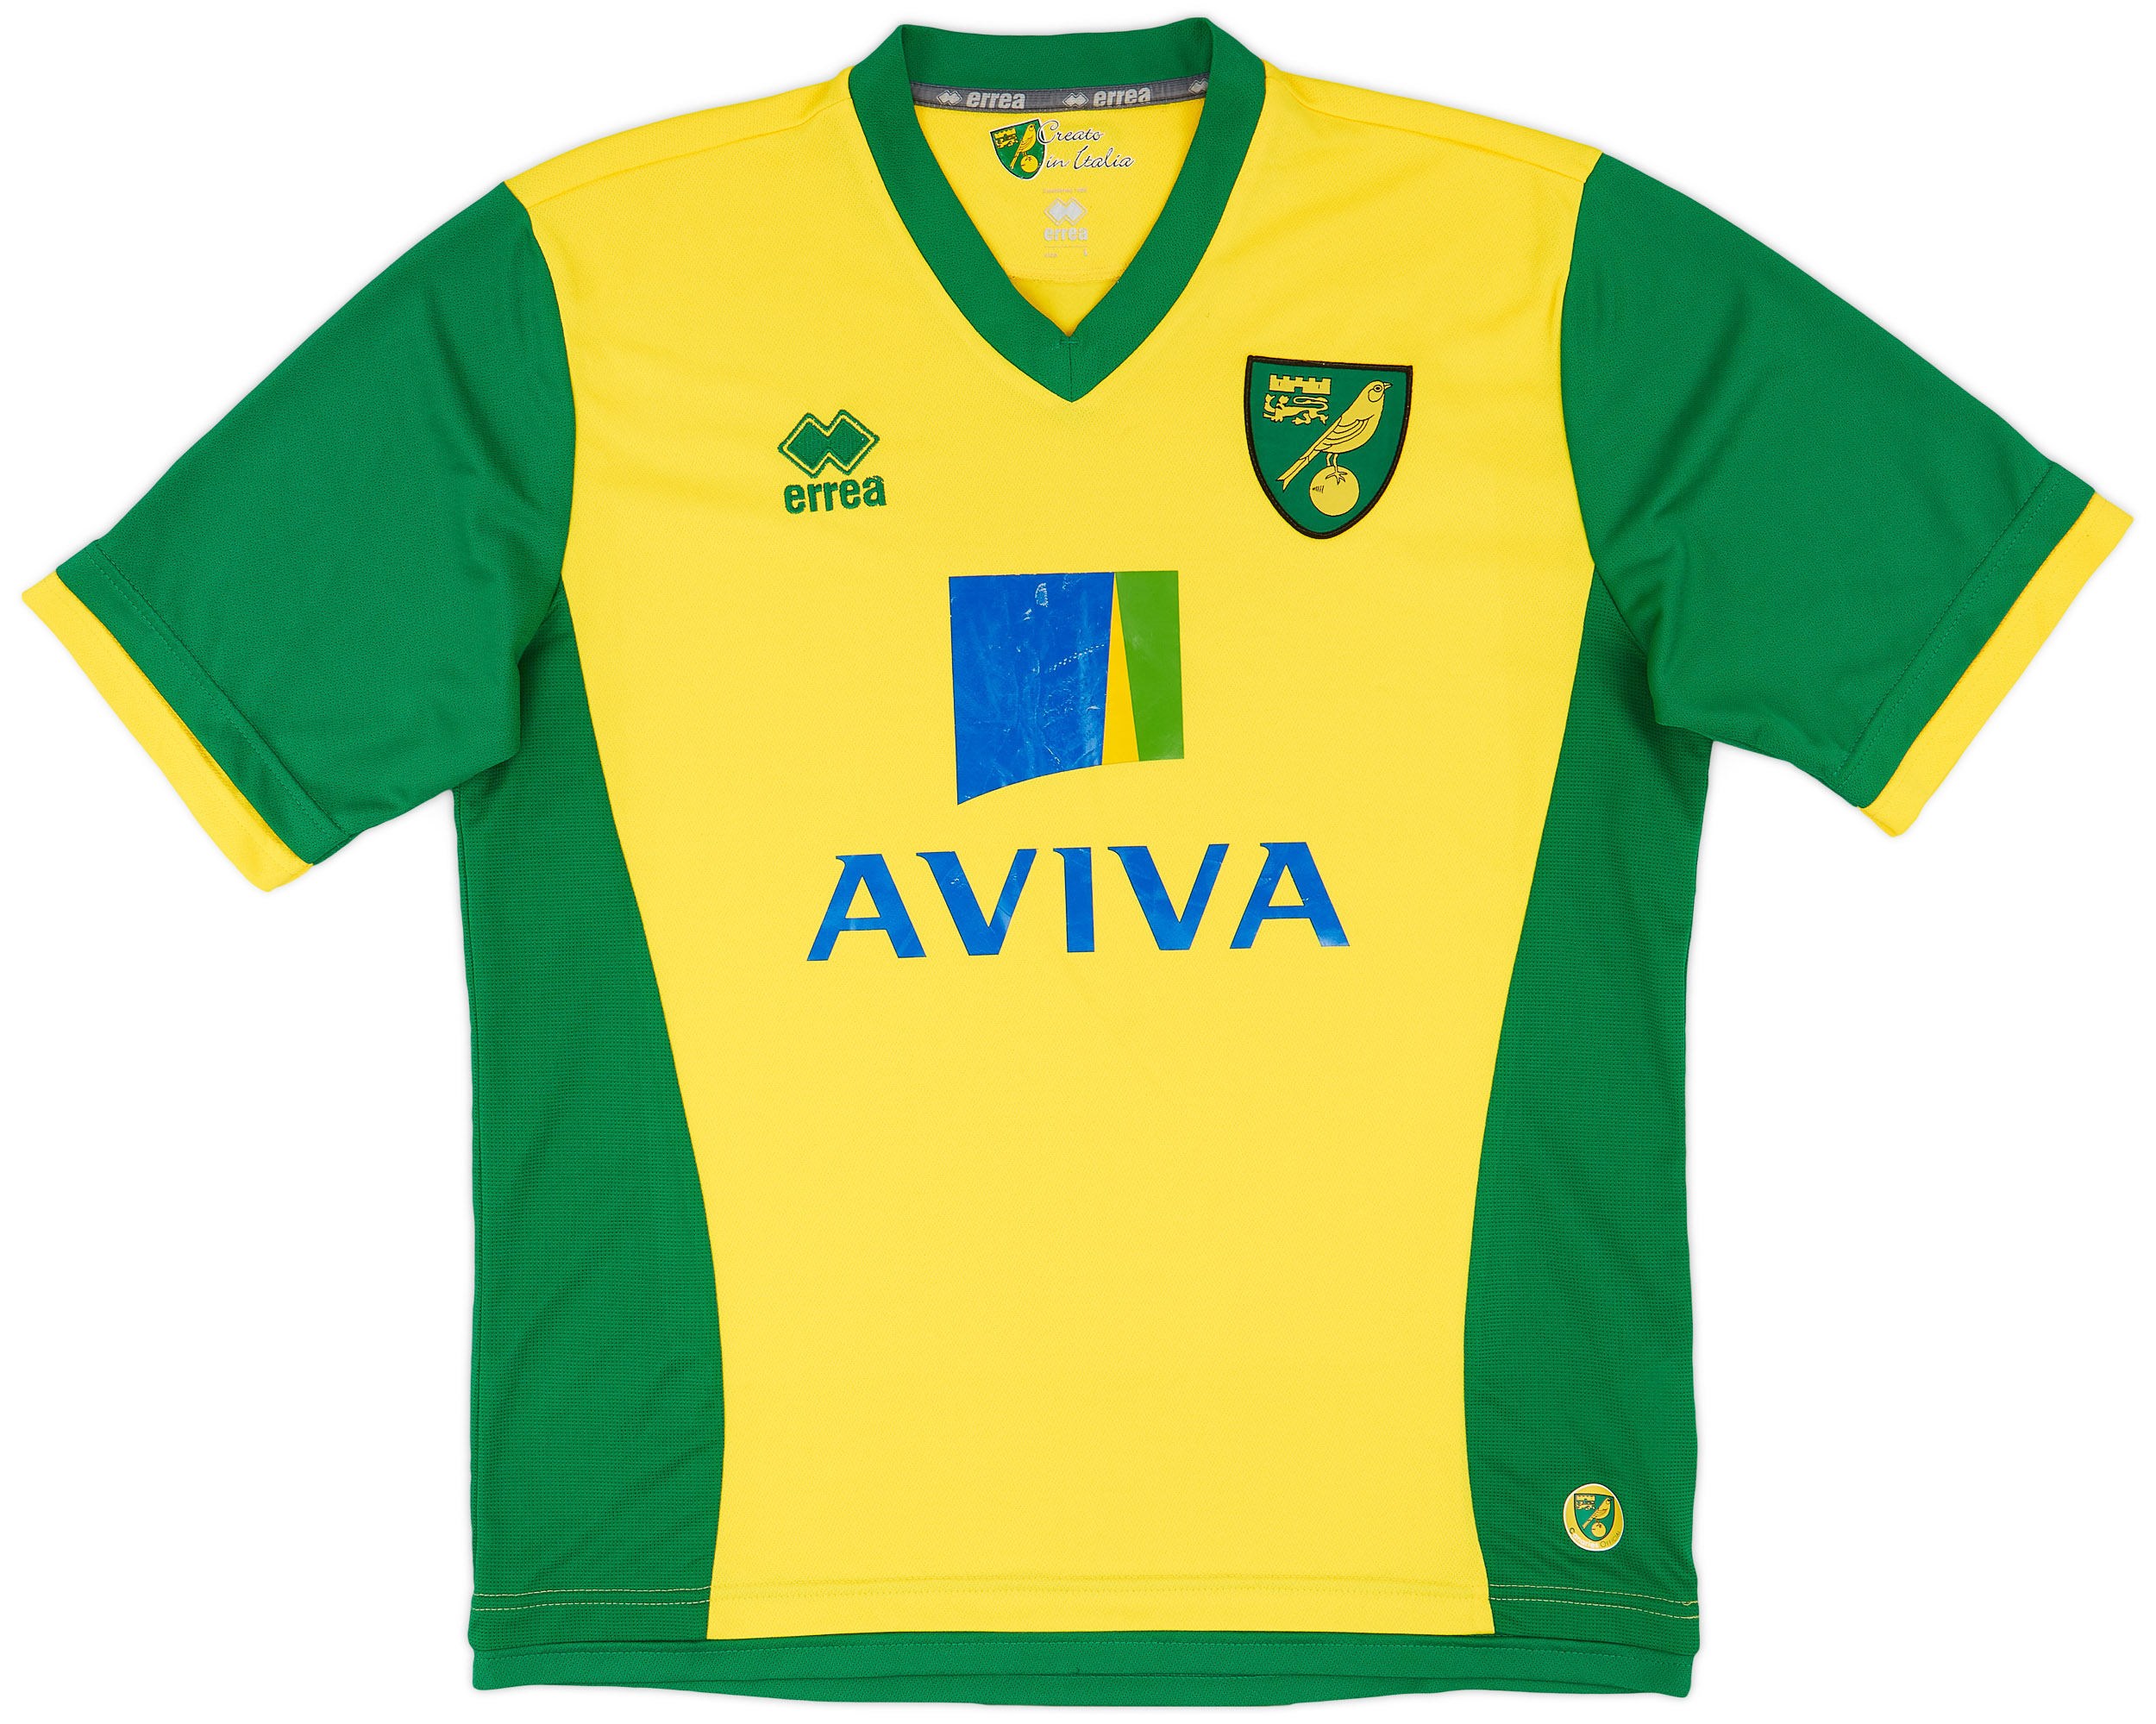 2013-14 Norwich City Home Shirt - 5/10 - ()